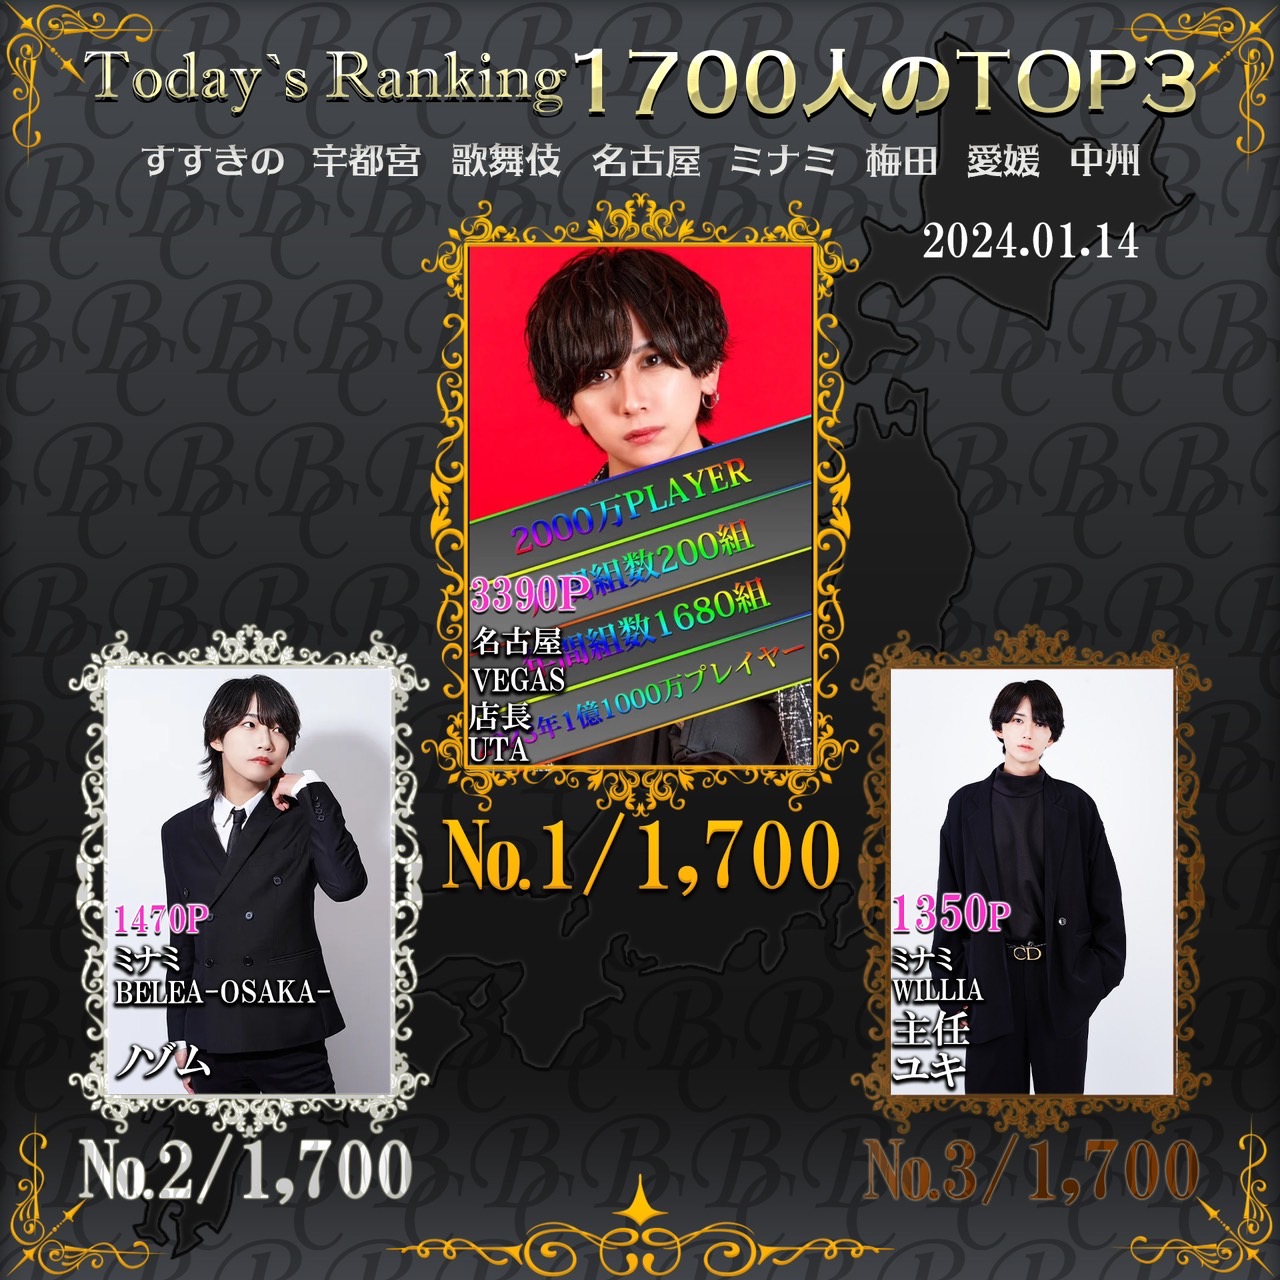 1/14  Today’s Ranking